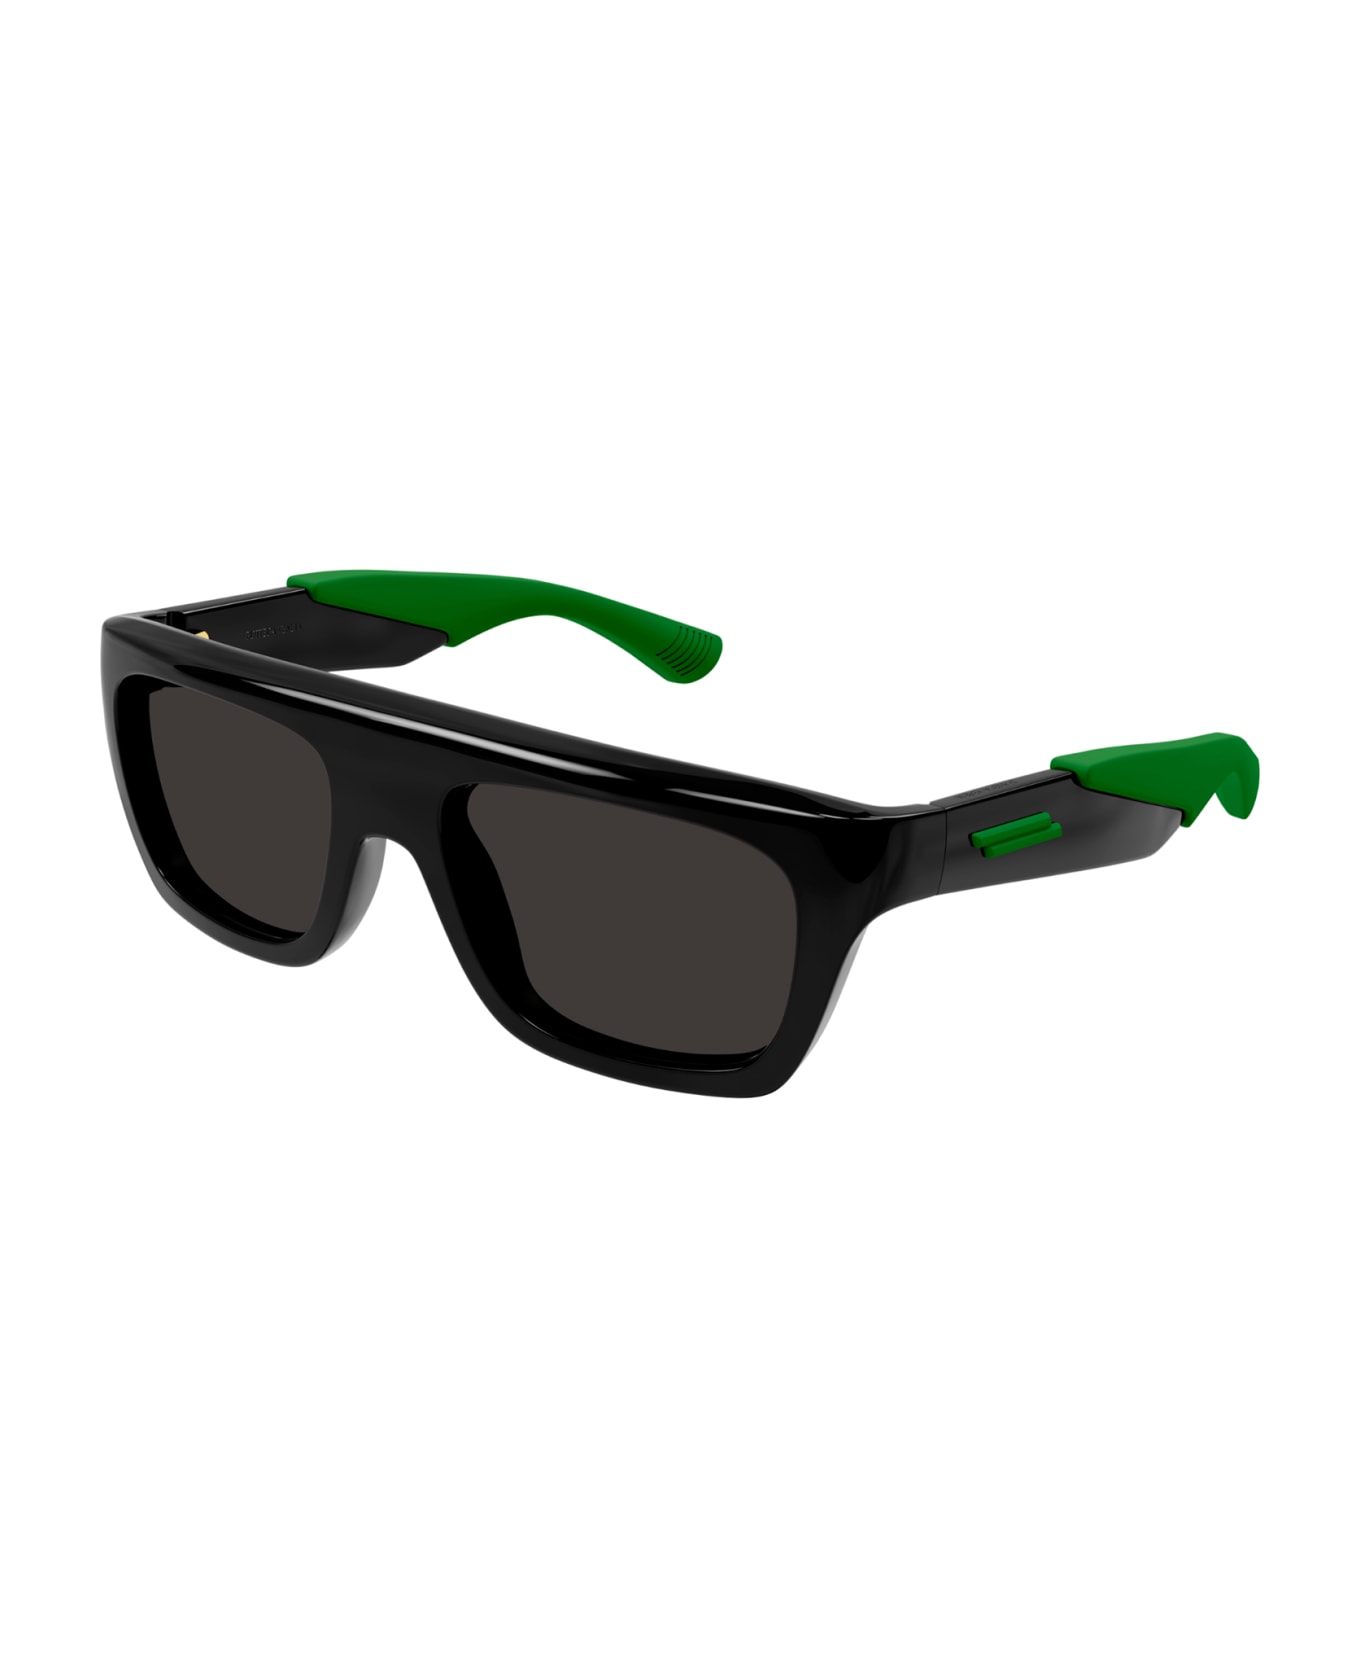 Bottega Veneta Eyewear 1fbl4li0a - Jimmy Choo Black Marvin Sunglasses